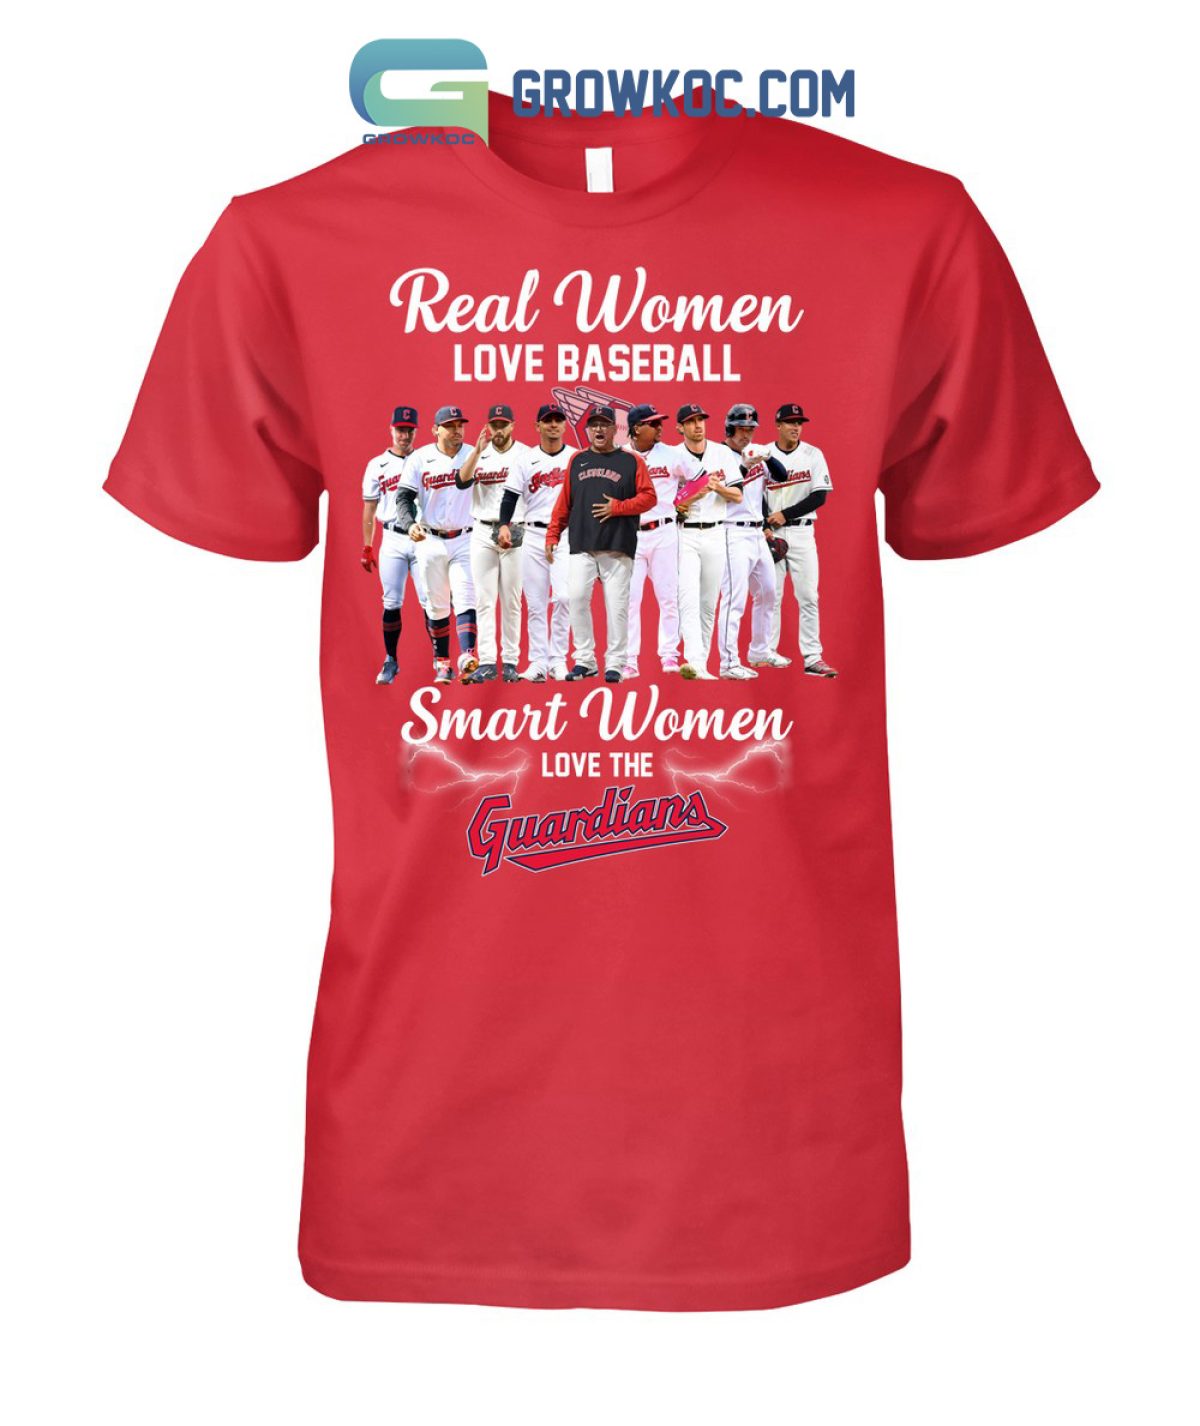 MLB Cleveland Guardians Mix Jersey Custom Personalized Hoodie Shirt -  Growkoc